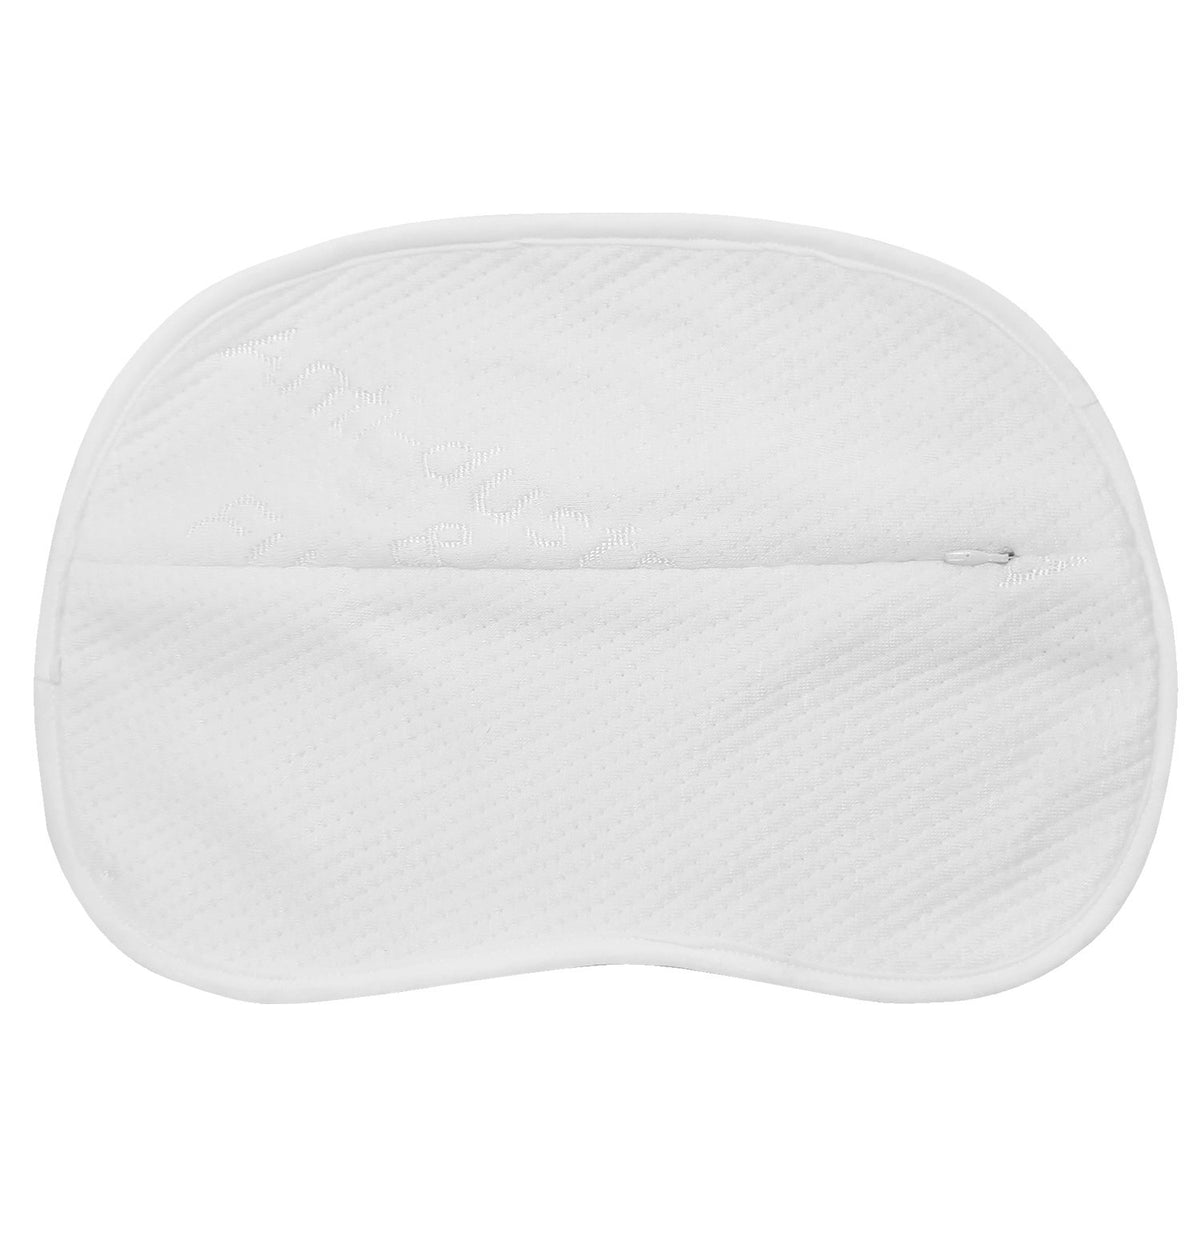 Bonbijou Snug Infant Pillow Cover - Bonbijou